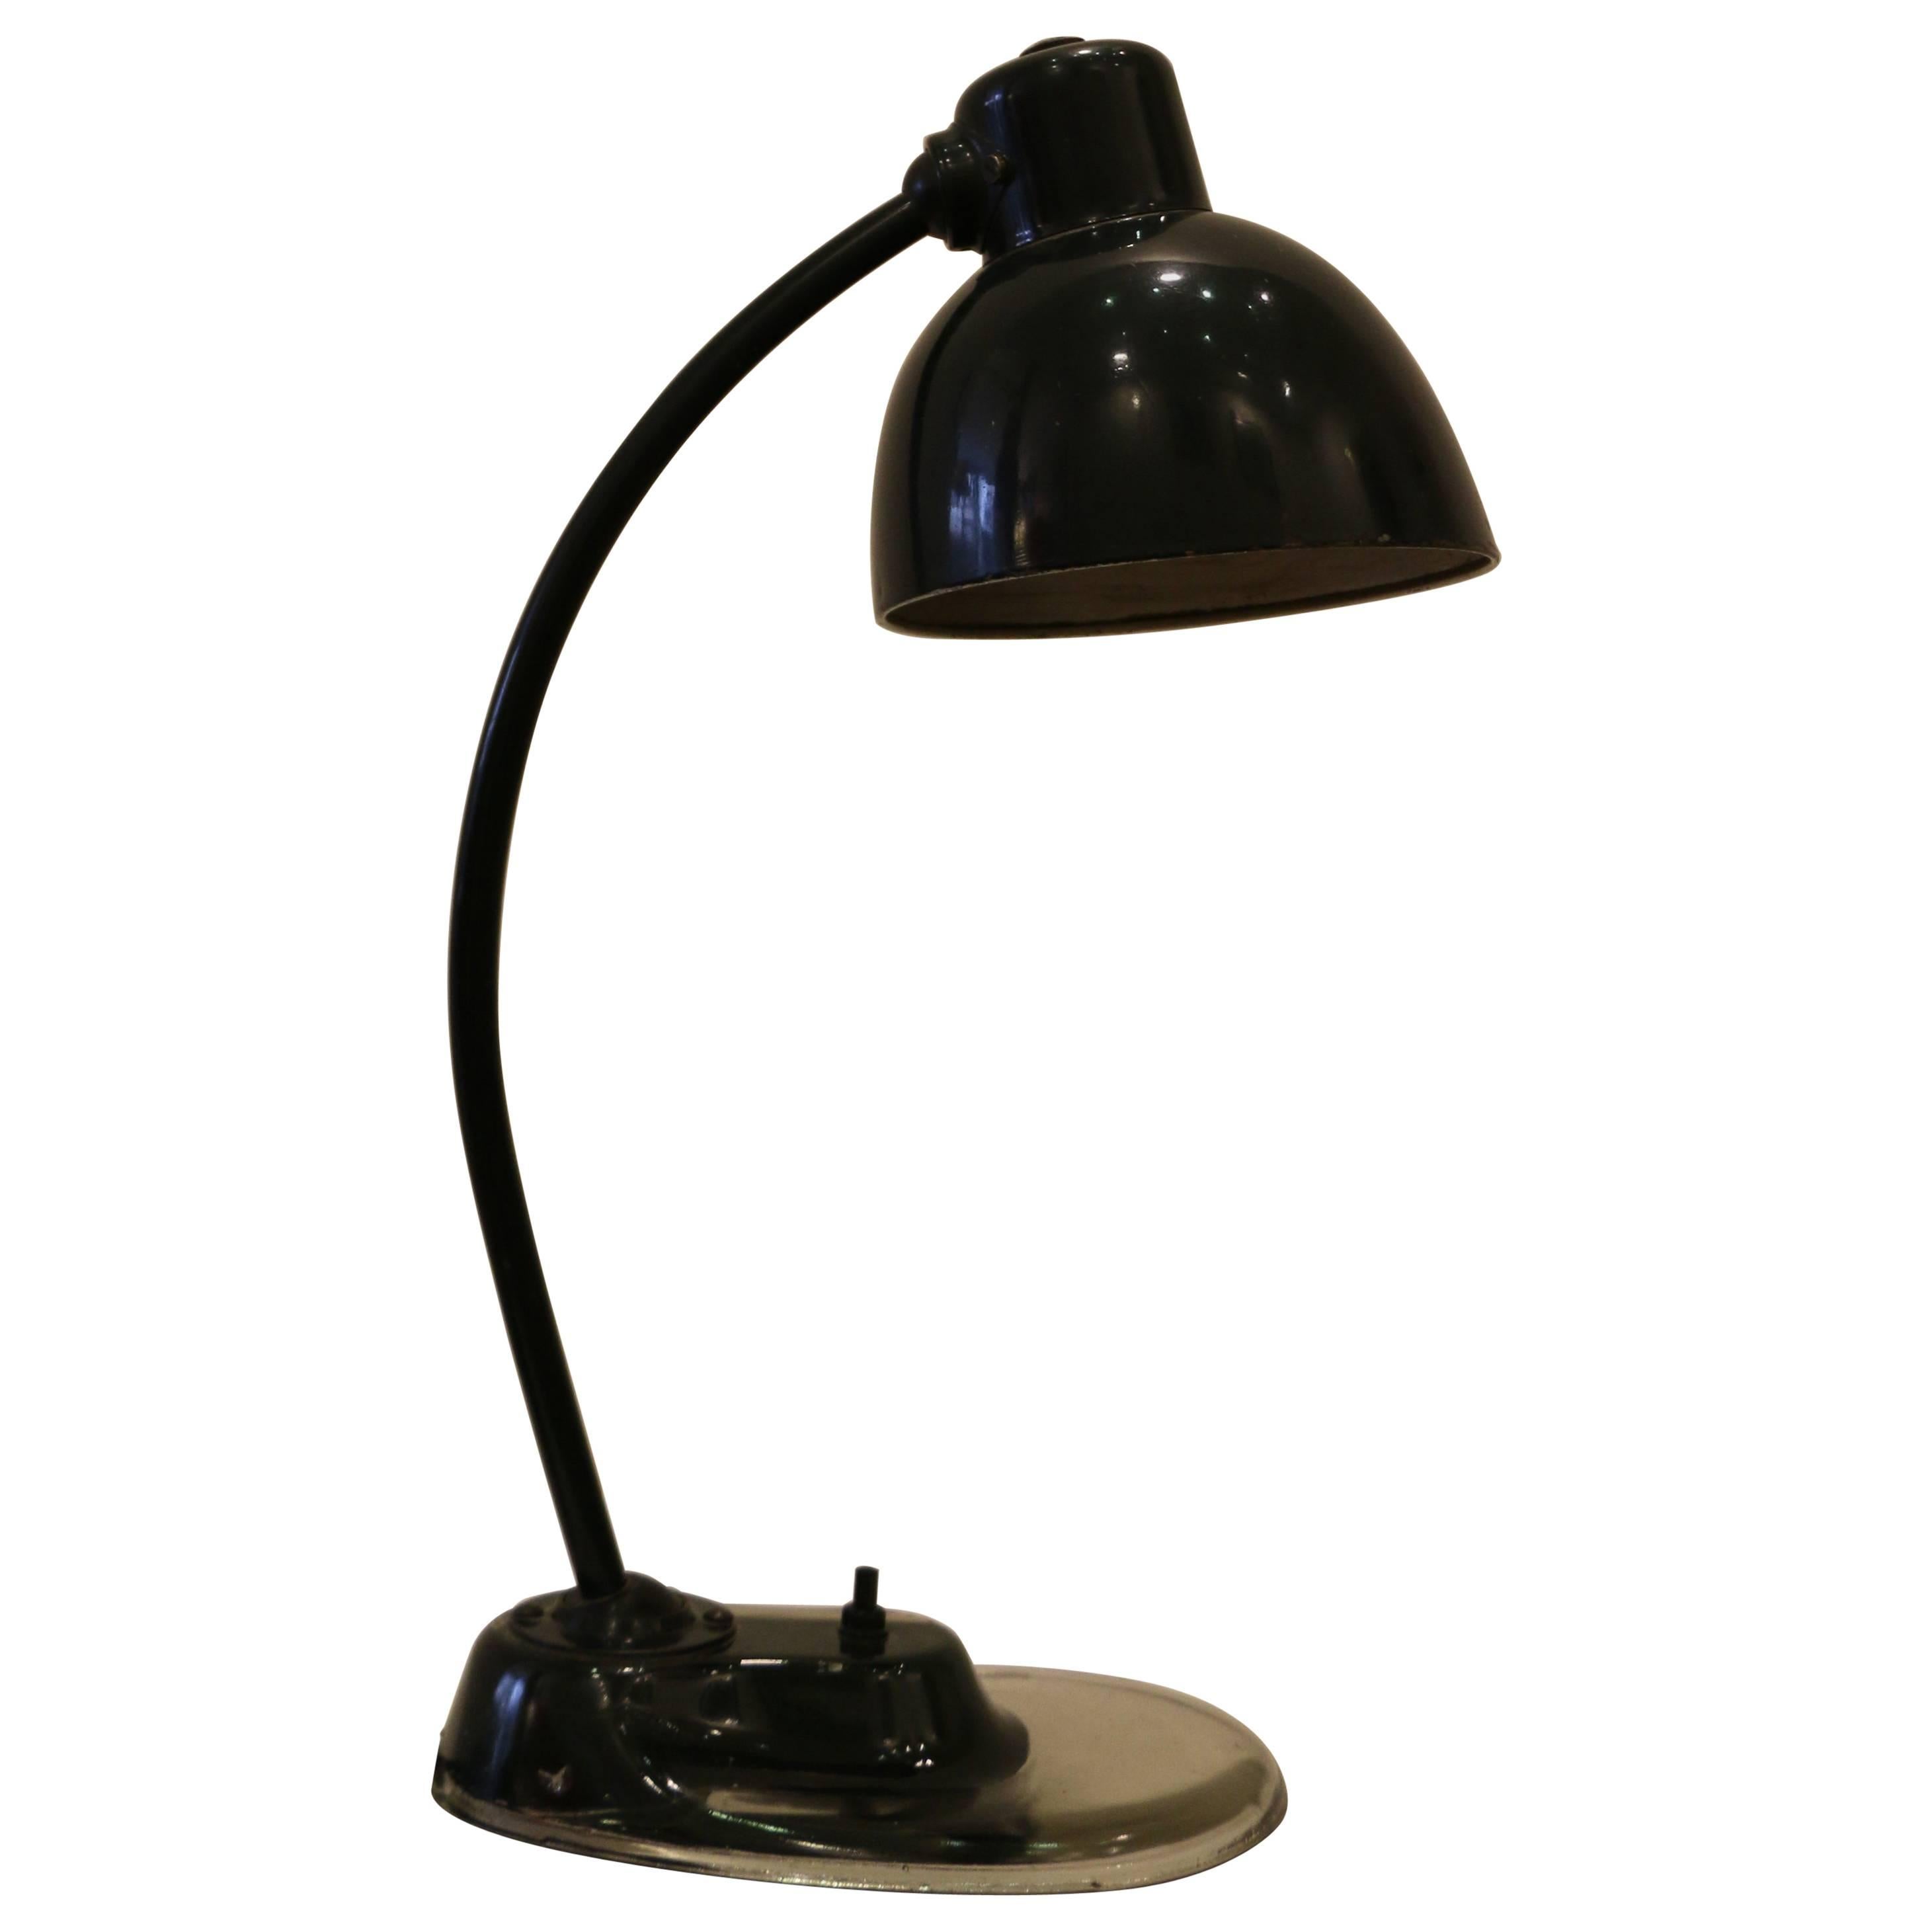 Bauhaus Desk Lamp Designed by Marianne Brandt, 1930s